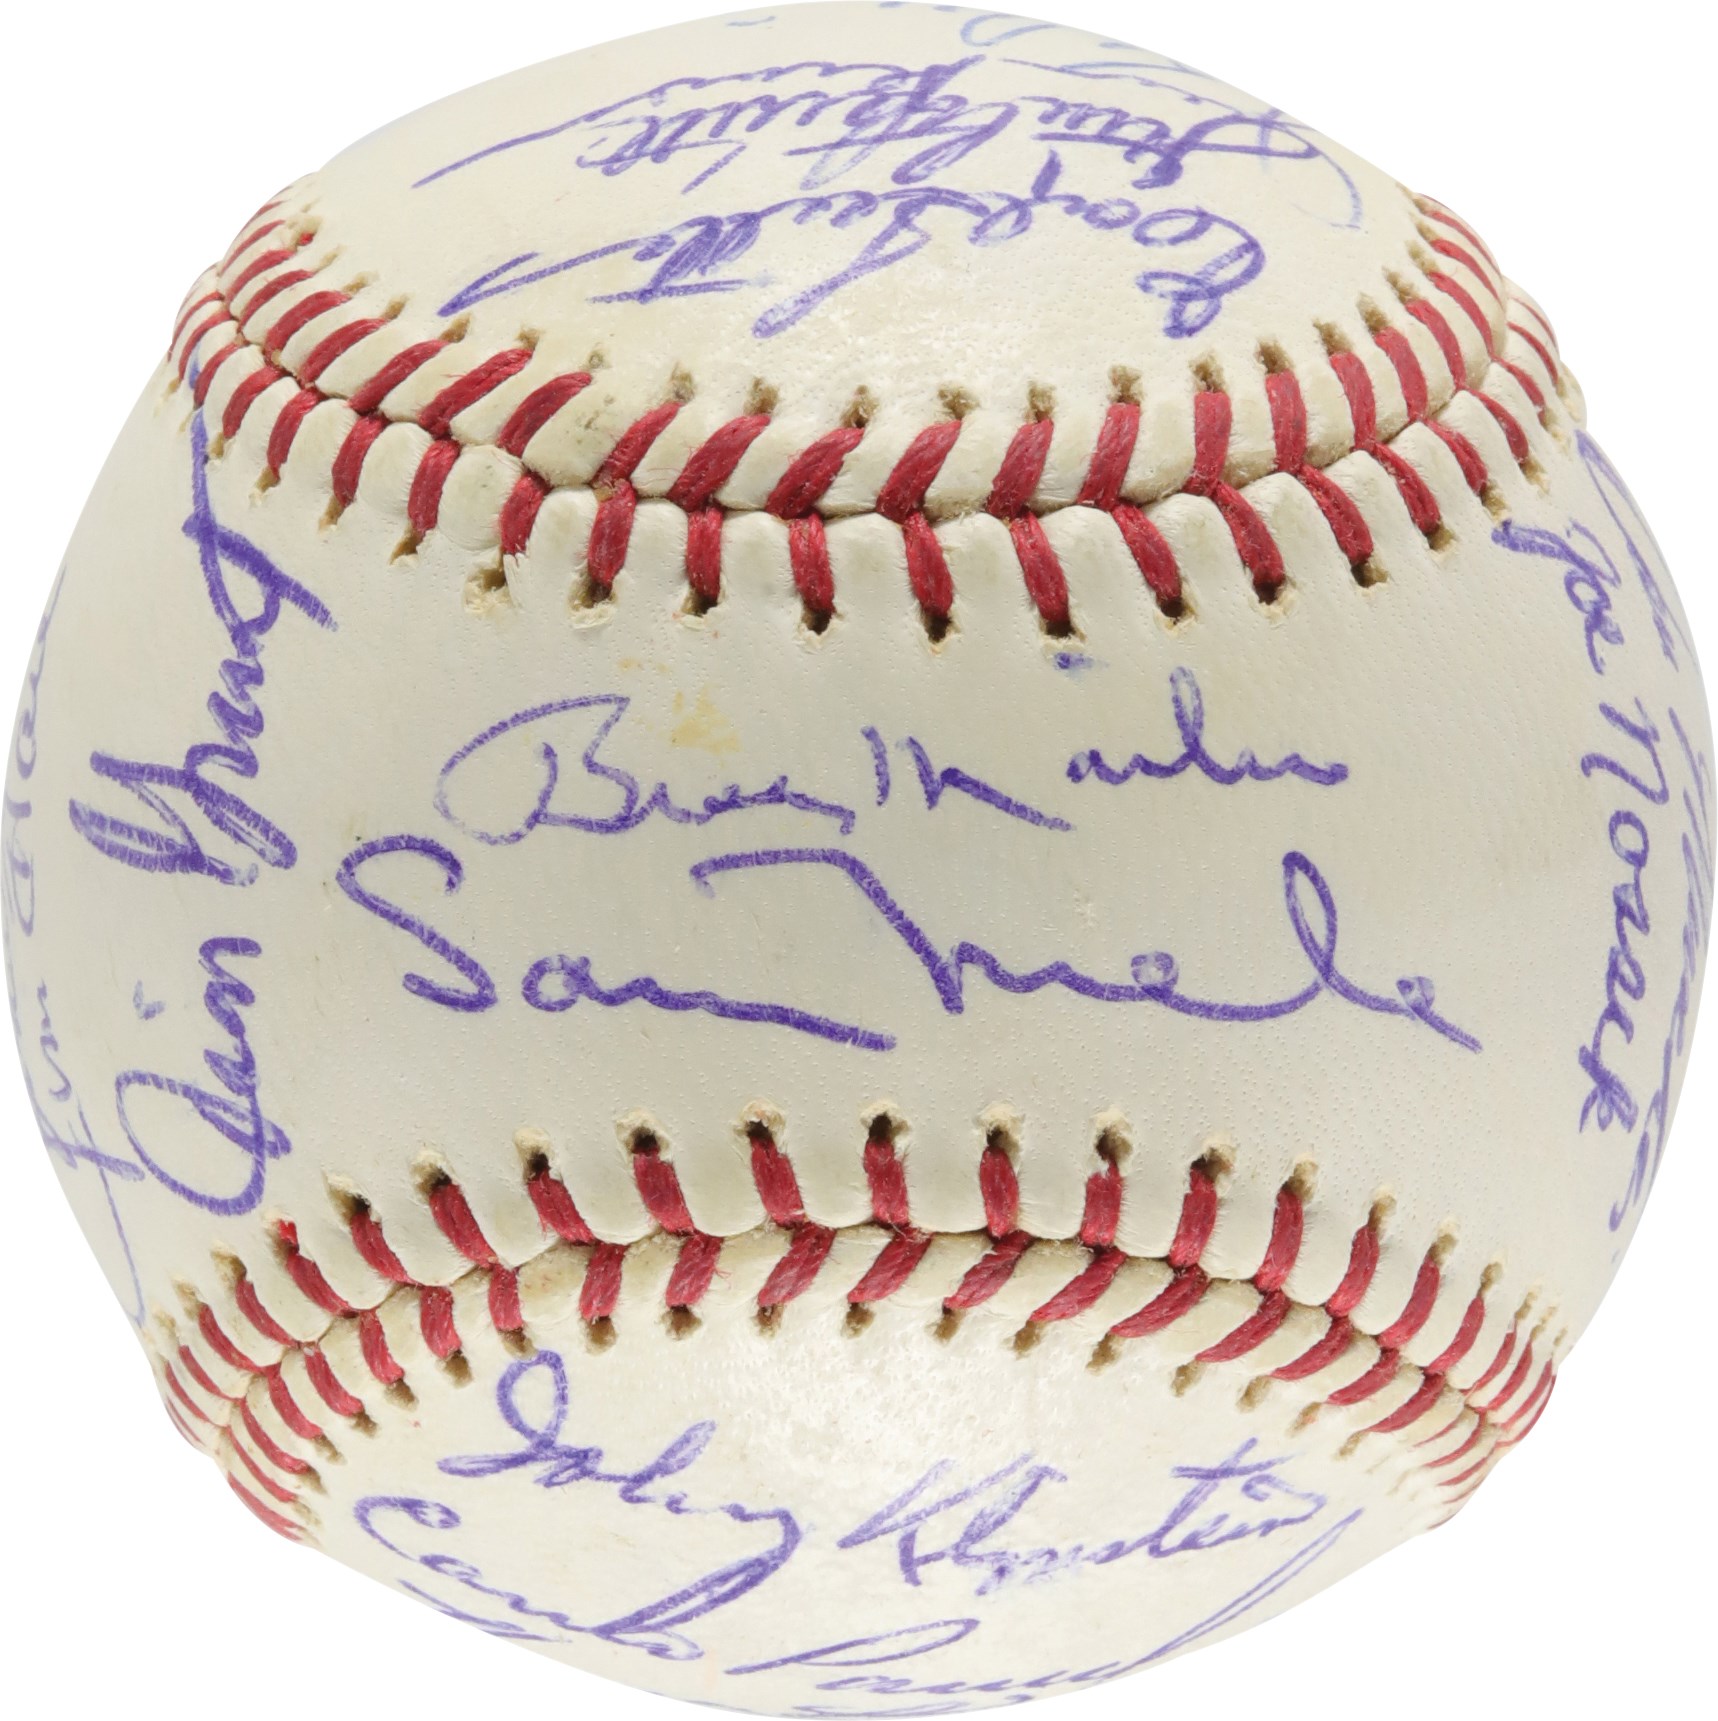 High Grade 1965 American League Champion Minnesota Twins Team-Signed Baseball